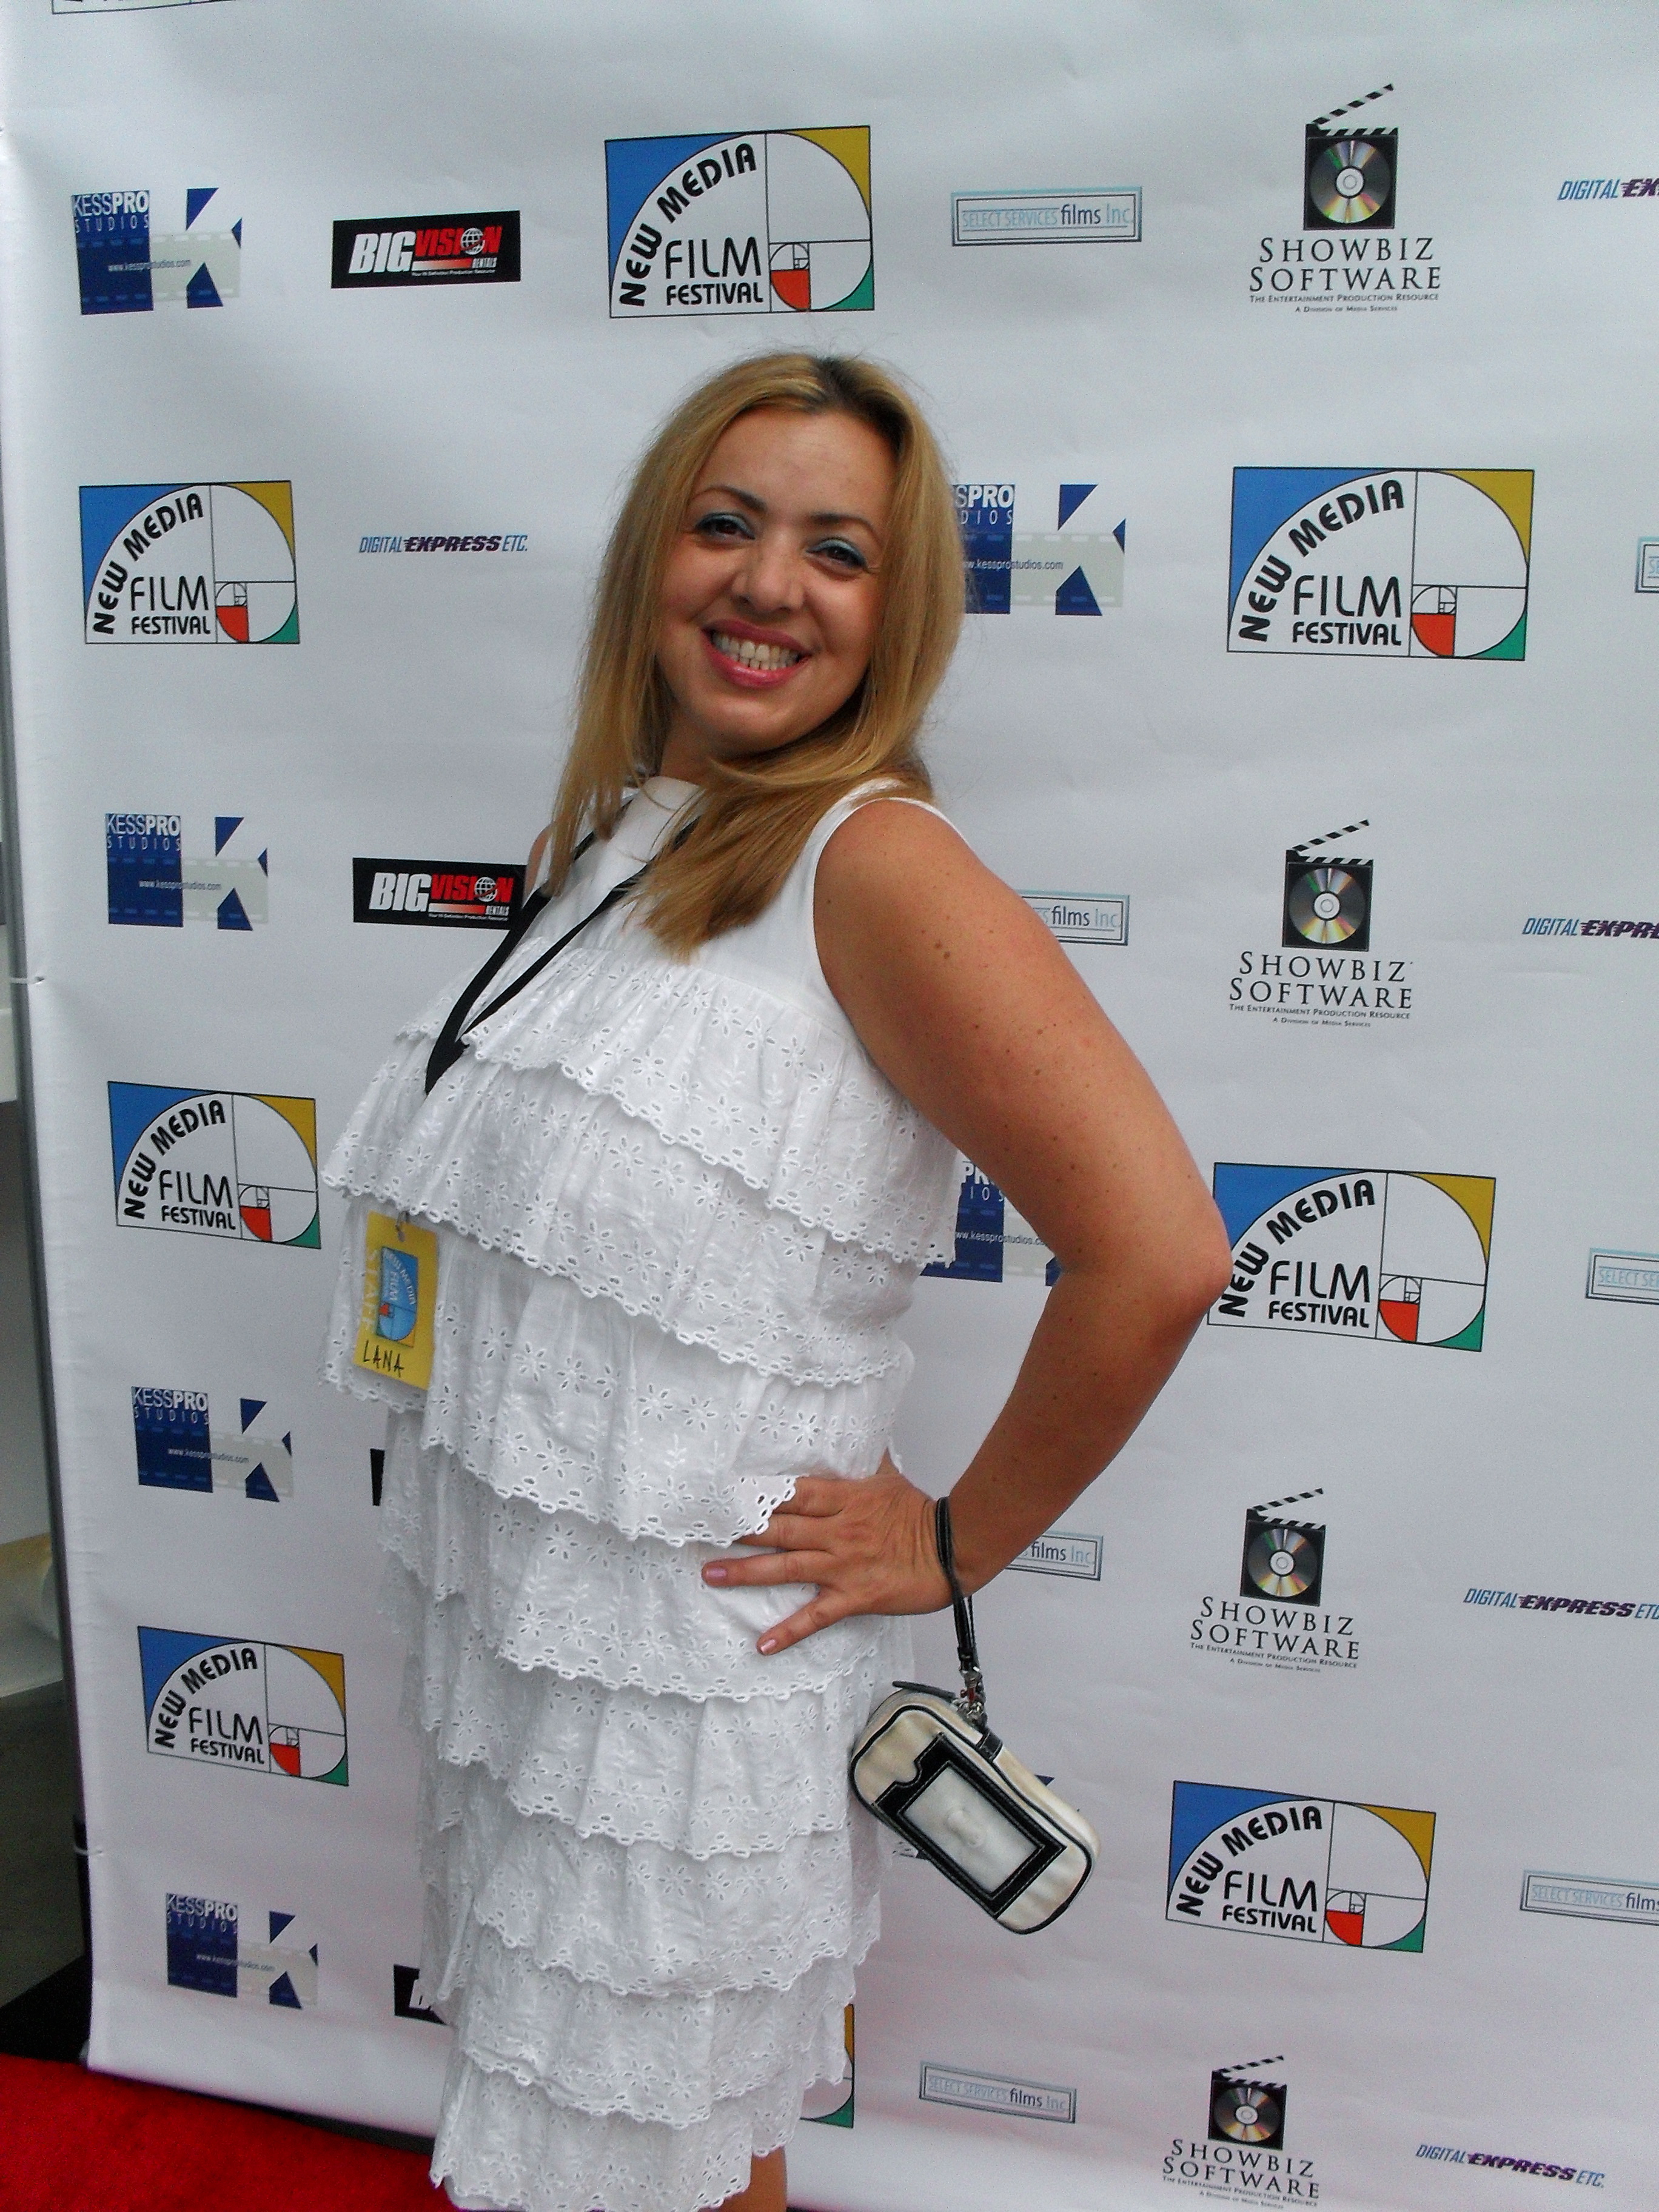 Lana Bergen at the New Media Film Festival